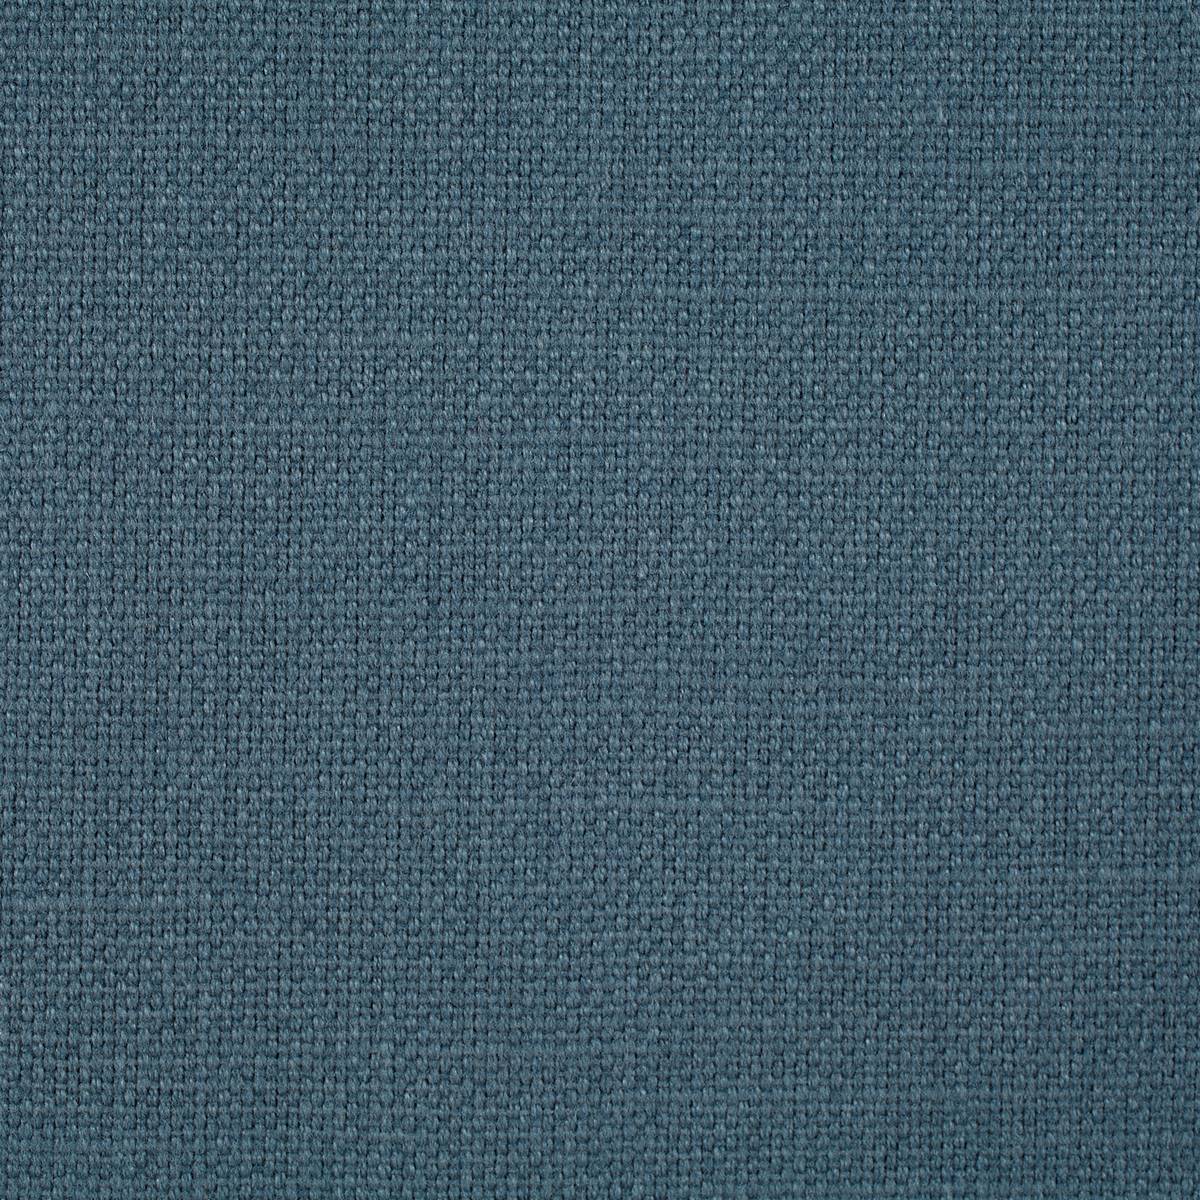 Arley Fjord Fabric by Sanderson